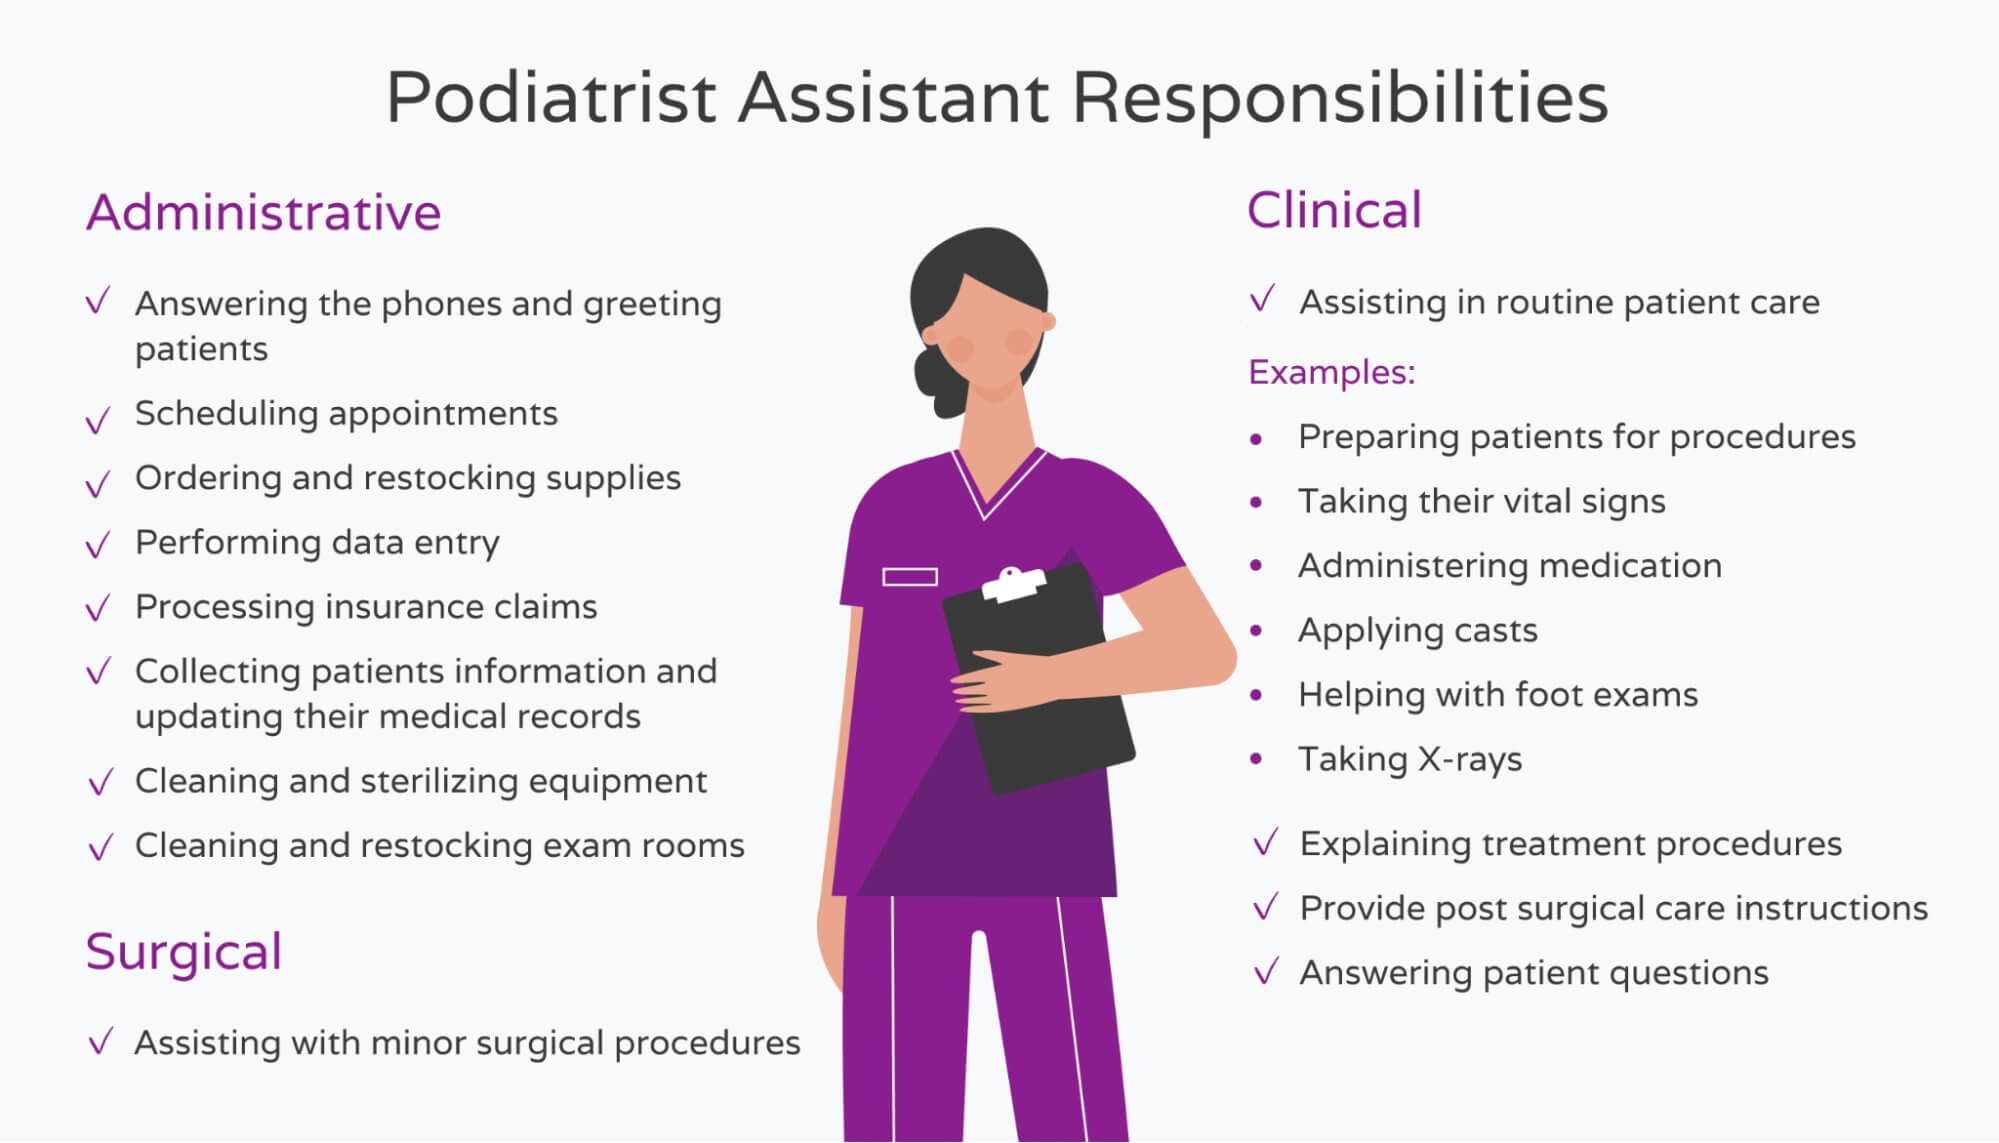  List of podiatrist assistant responsibilities